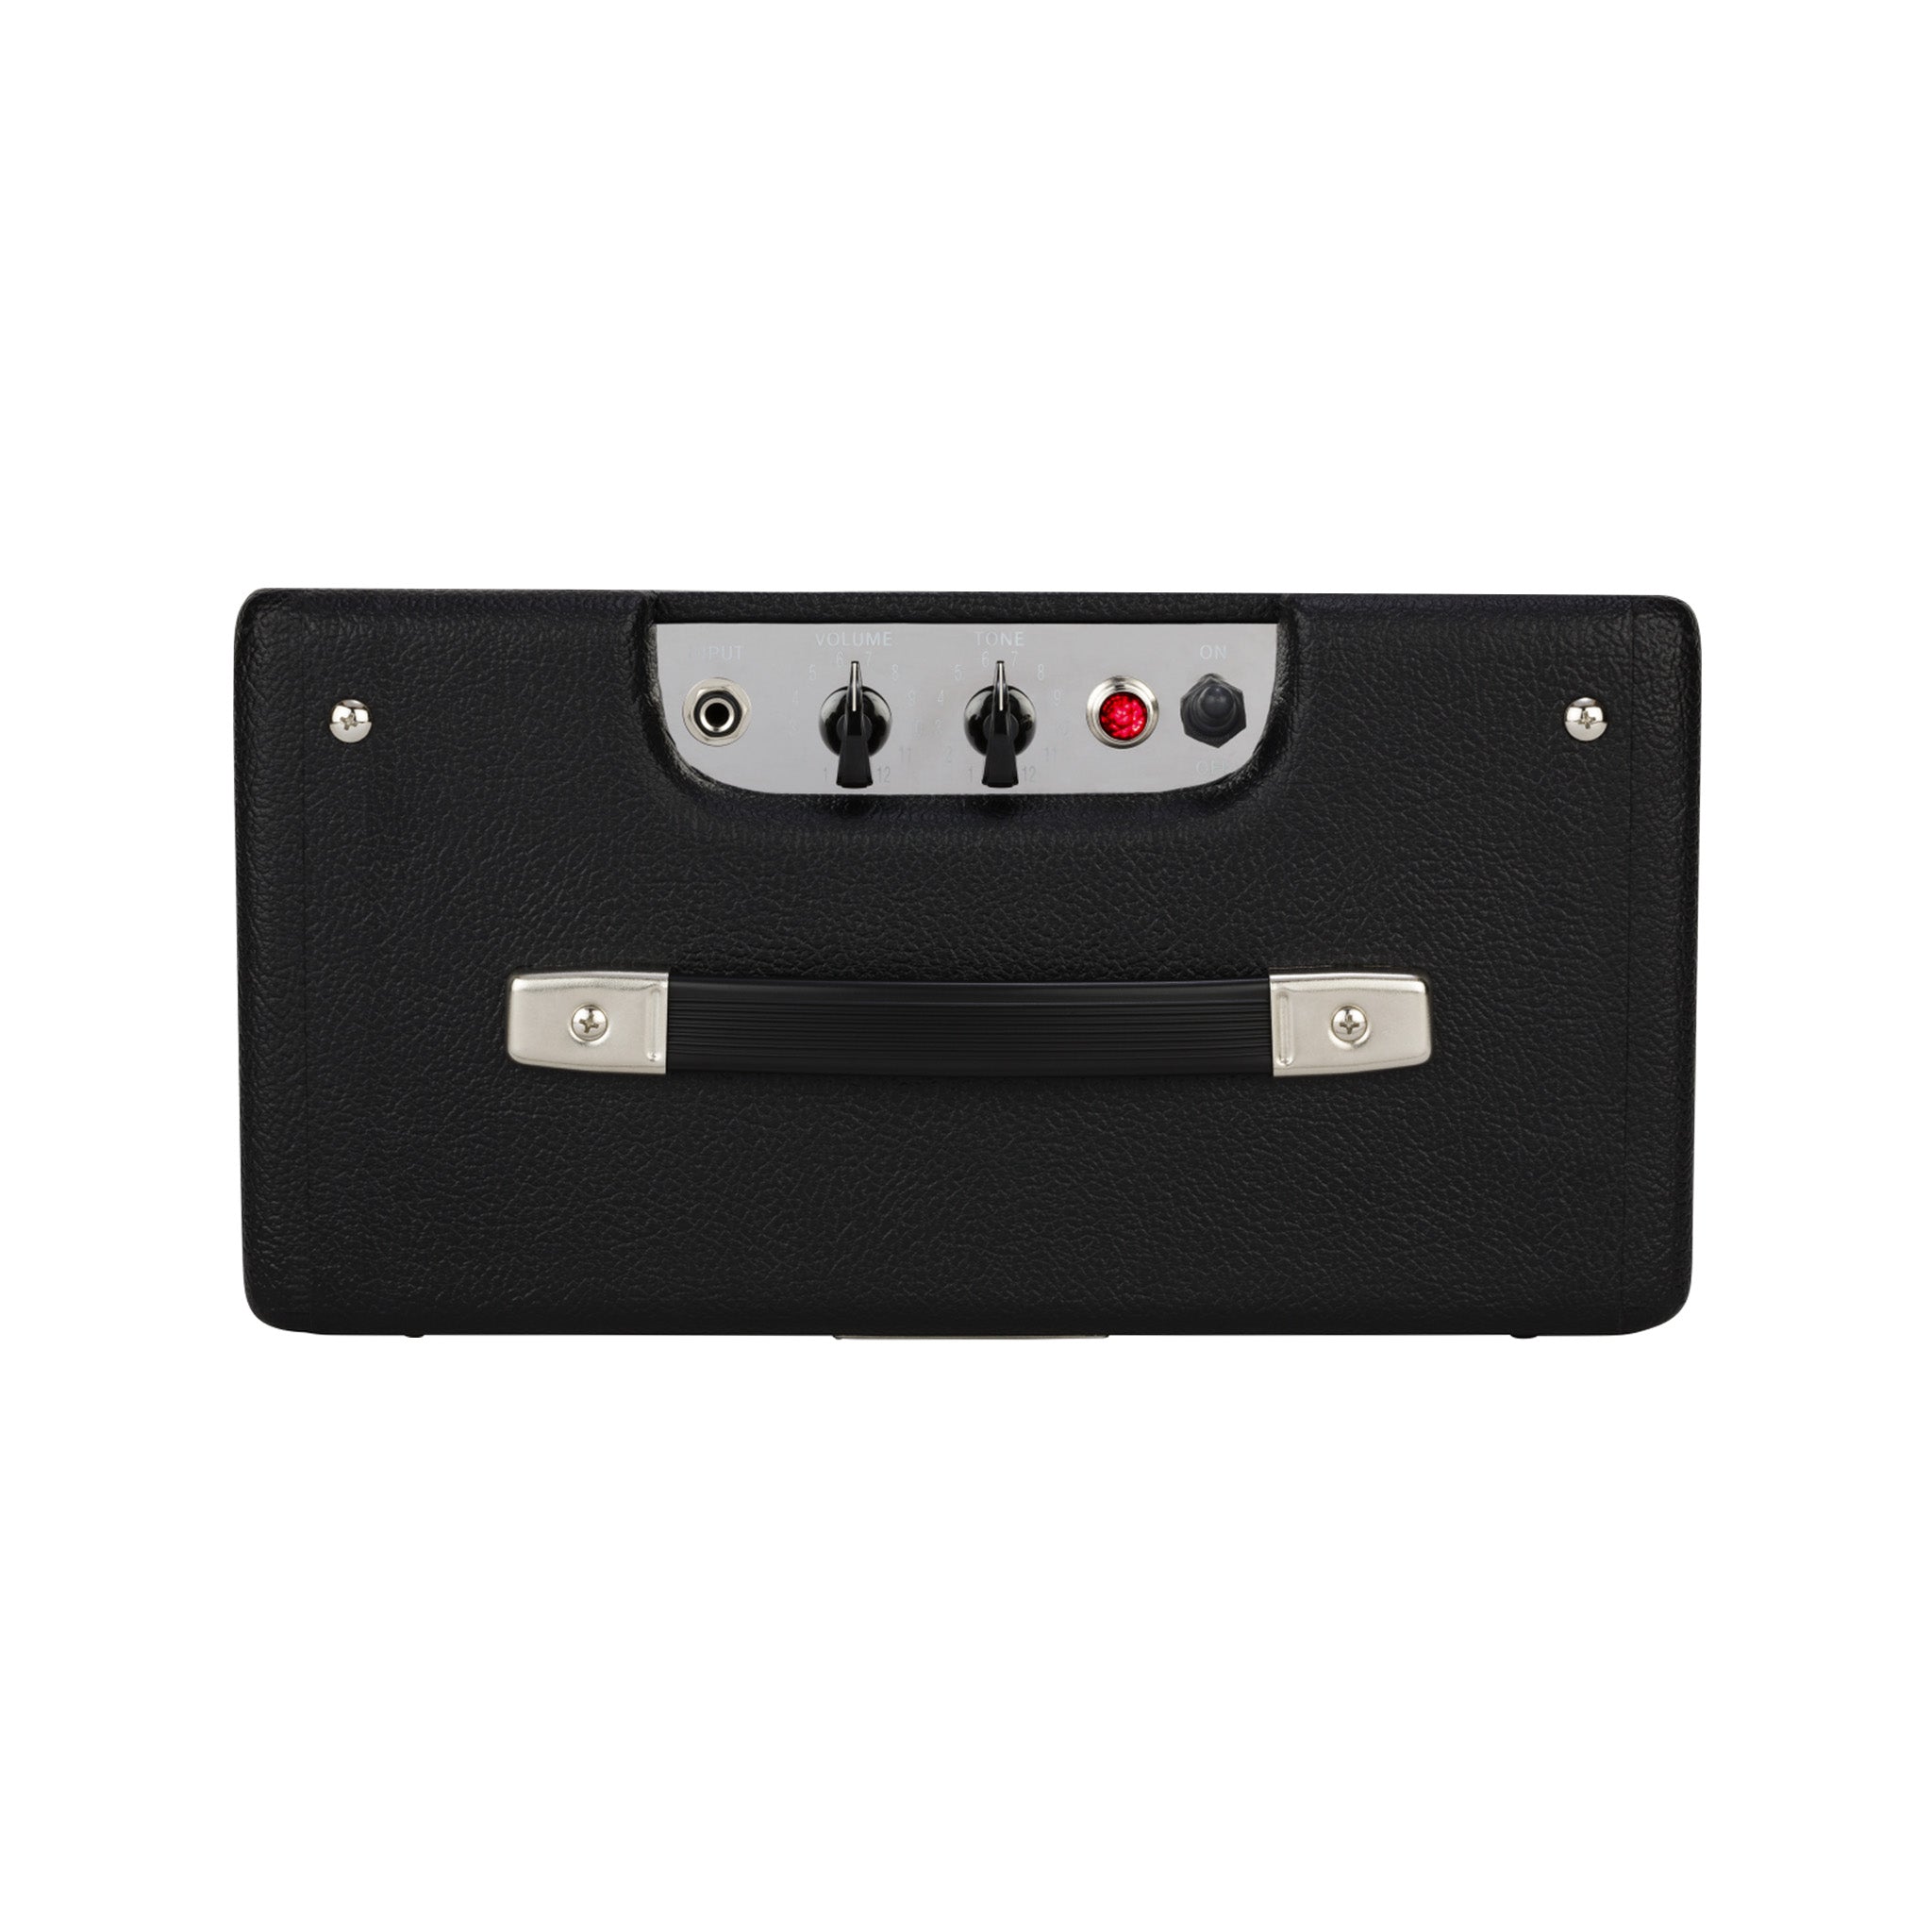 Fender Pro Junior IV SE Valve Combo Amplifier, Black, 230V UK